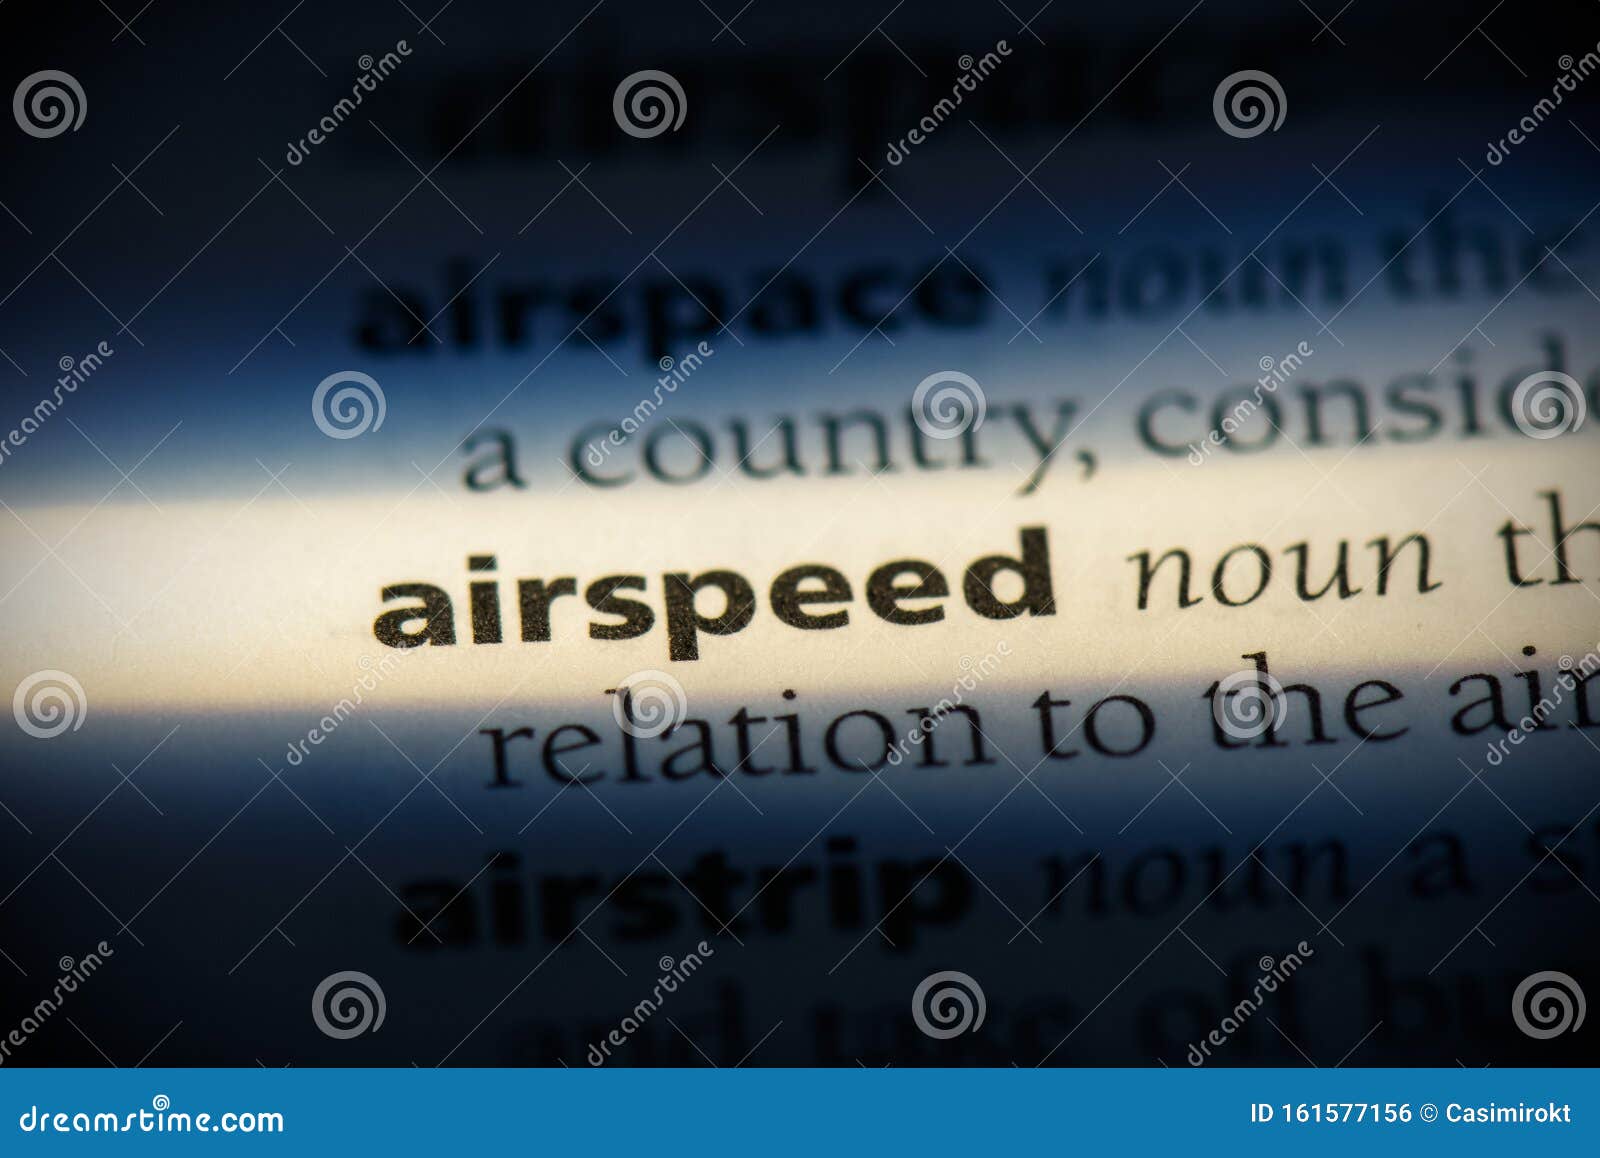 airspeed